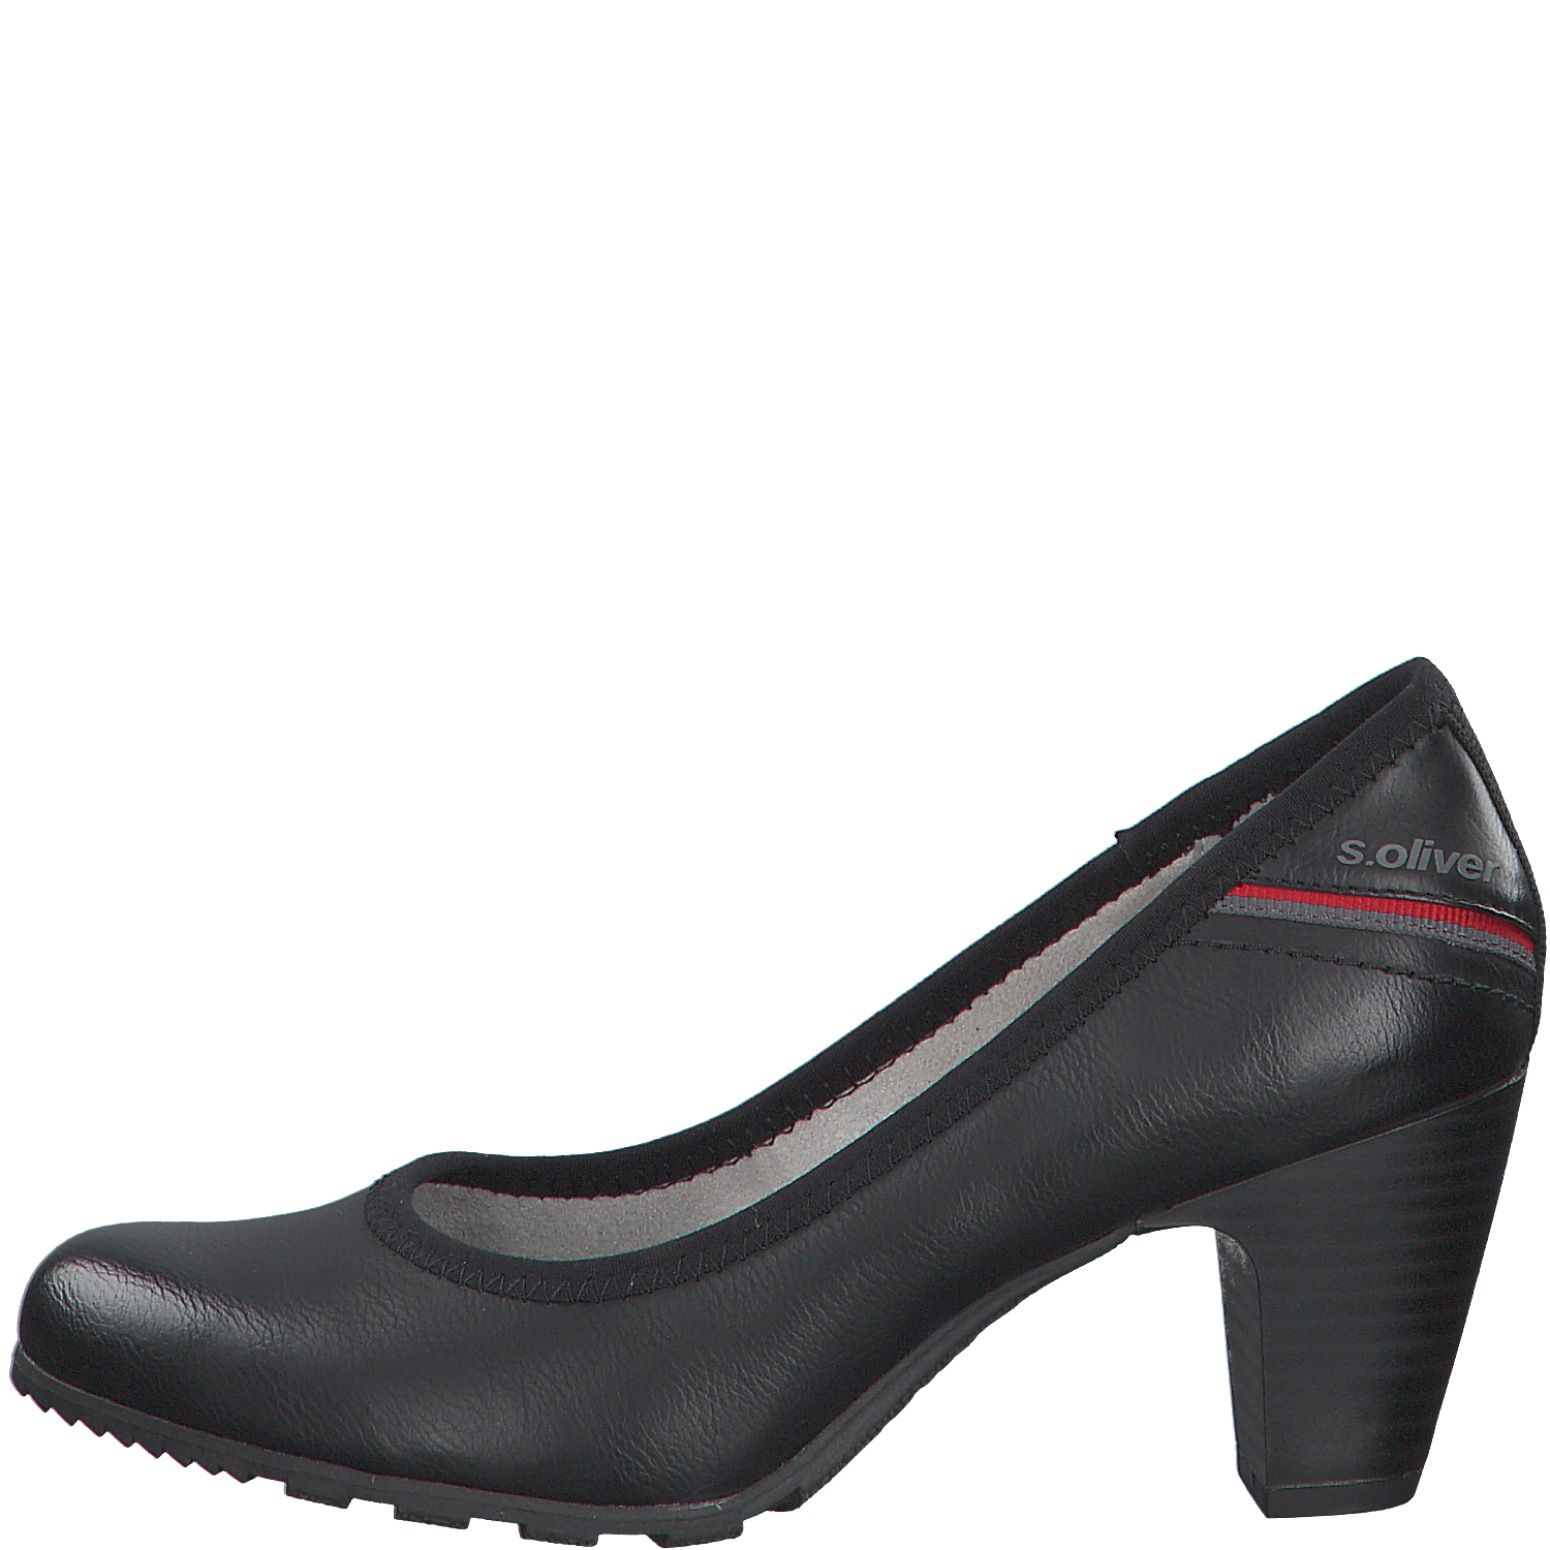 S.OLIVER női cipő 5-22404-25 001 BLACK